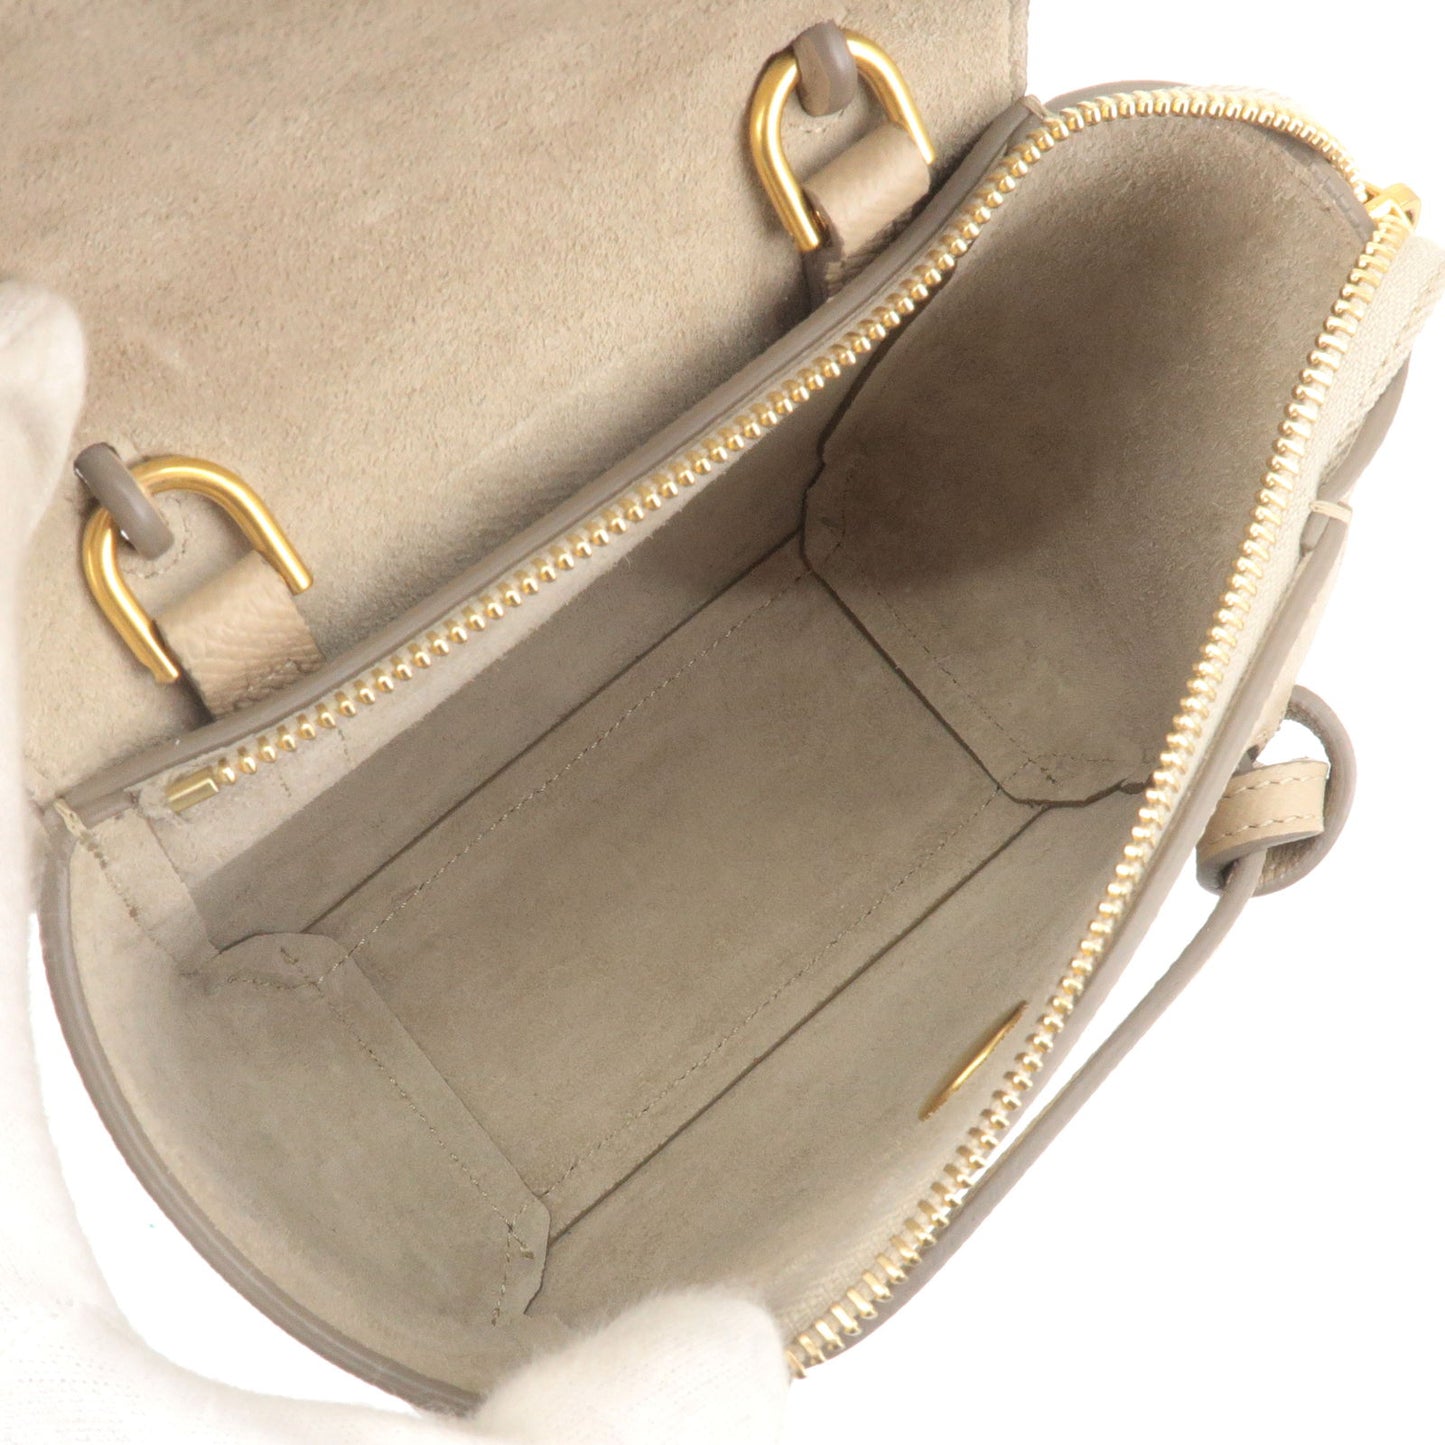 Authentic CELINE Leather Pico Belt Bag 2Way Bag Light Taupe 194263